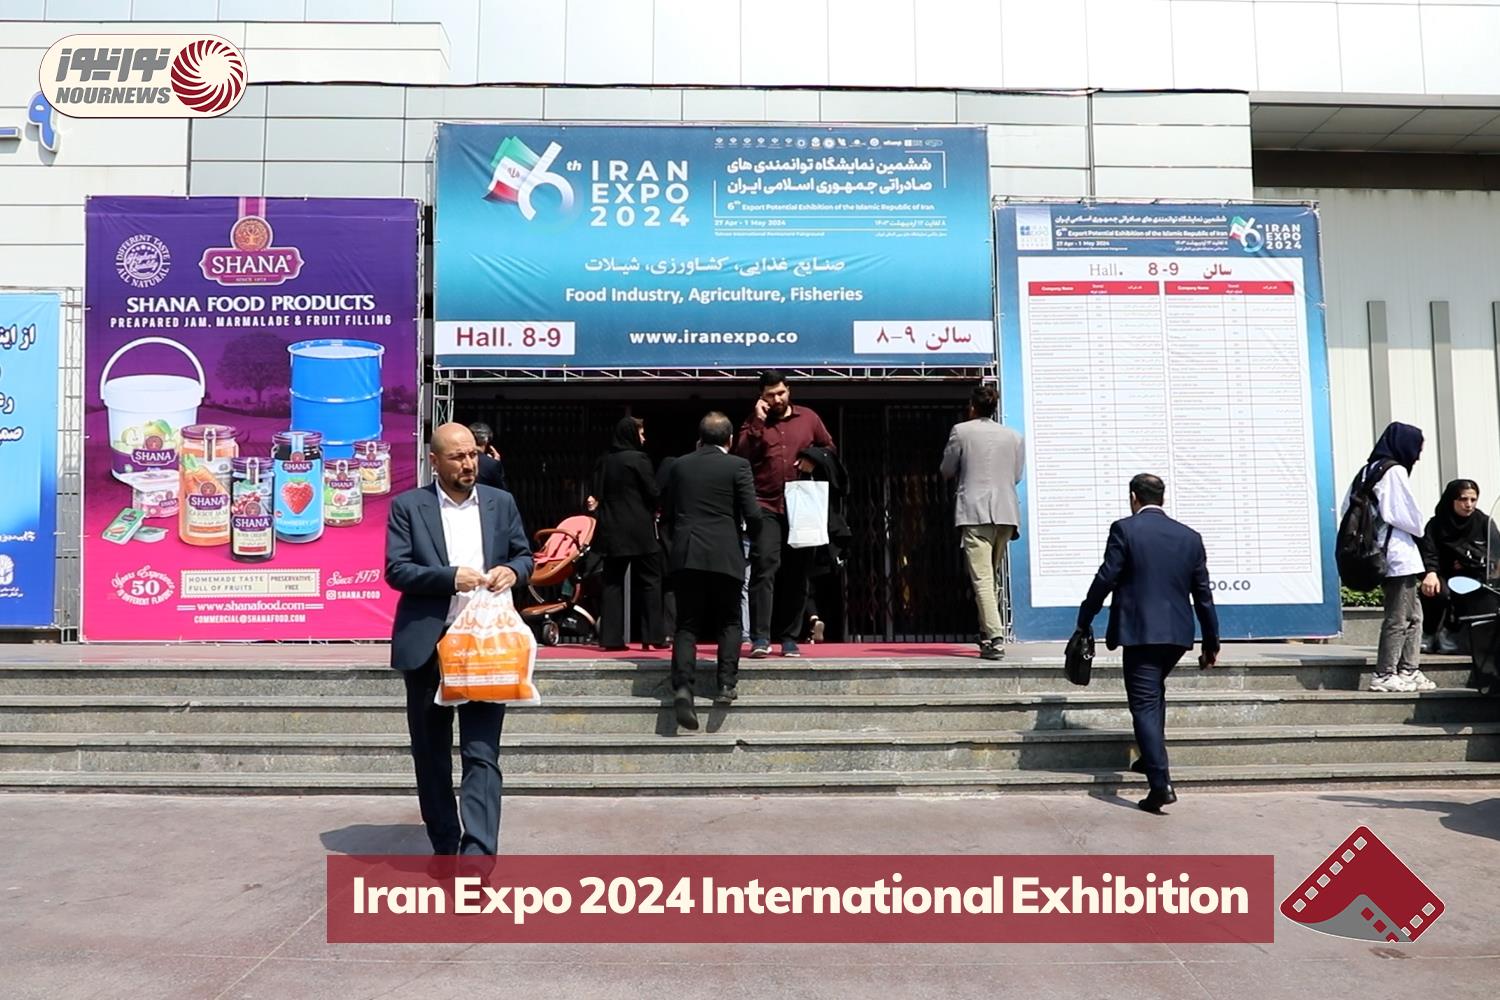 Iran Expo 2024 International Exhibition